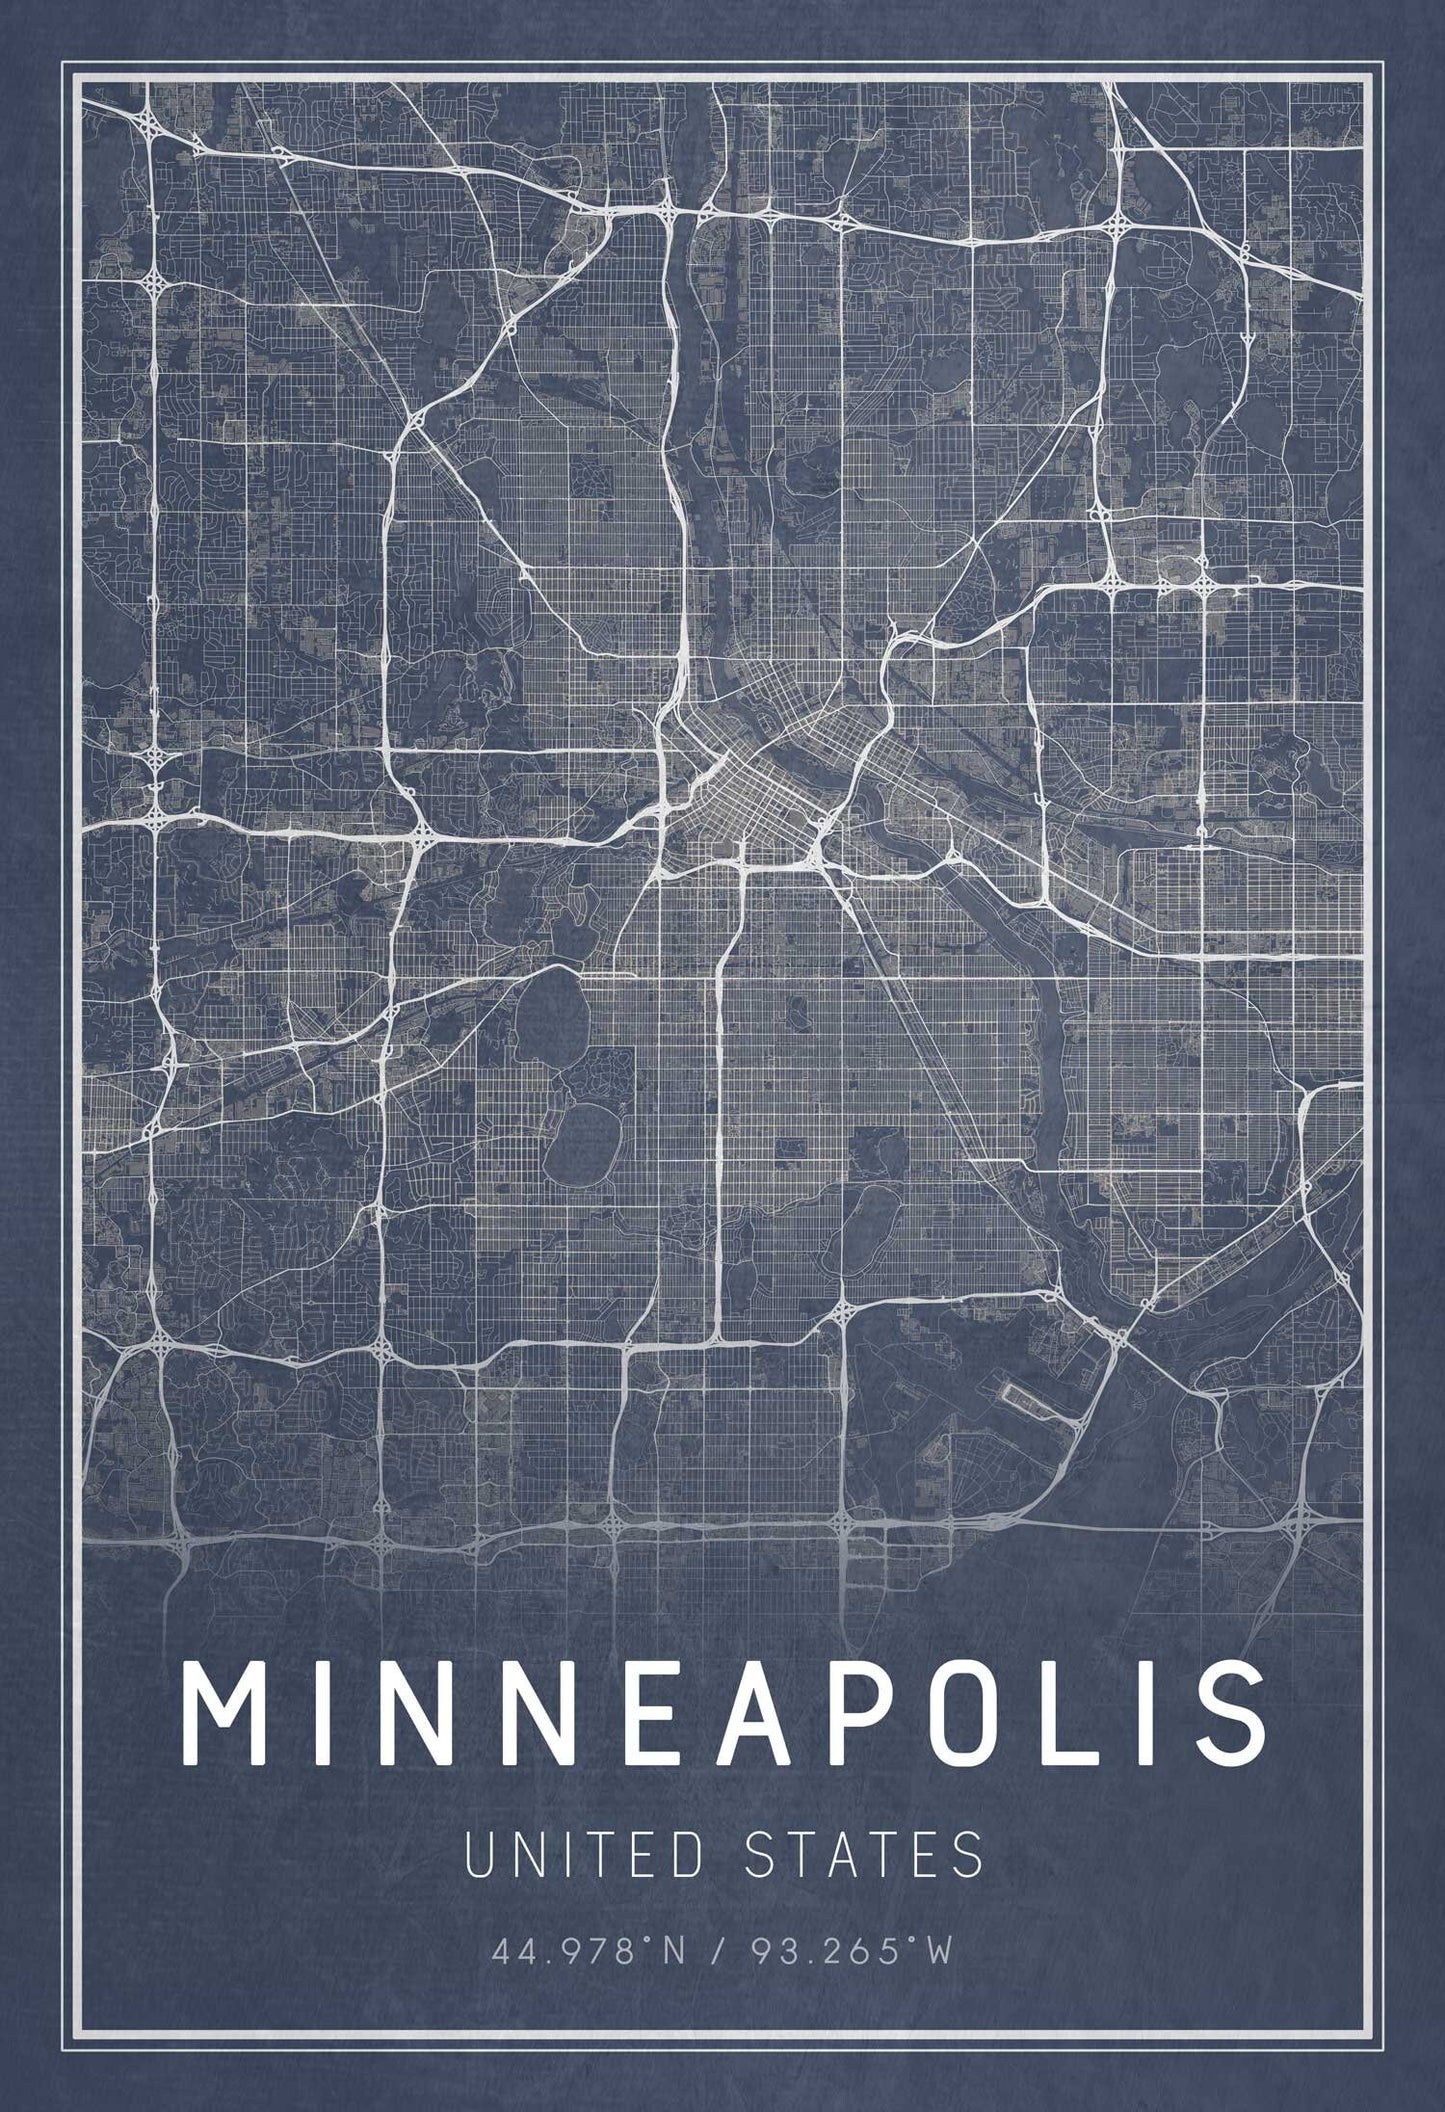 Full image of Minneapolis Roads Poster